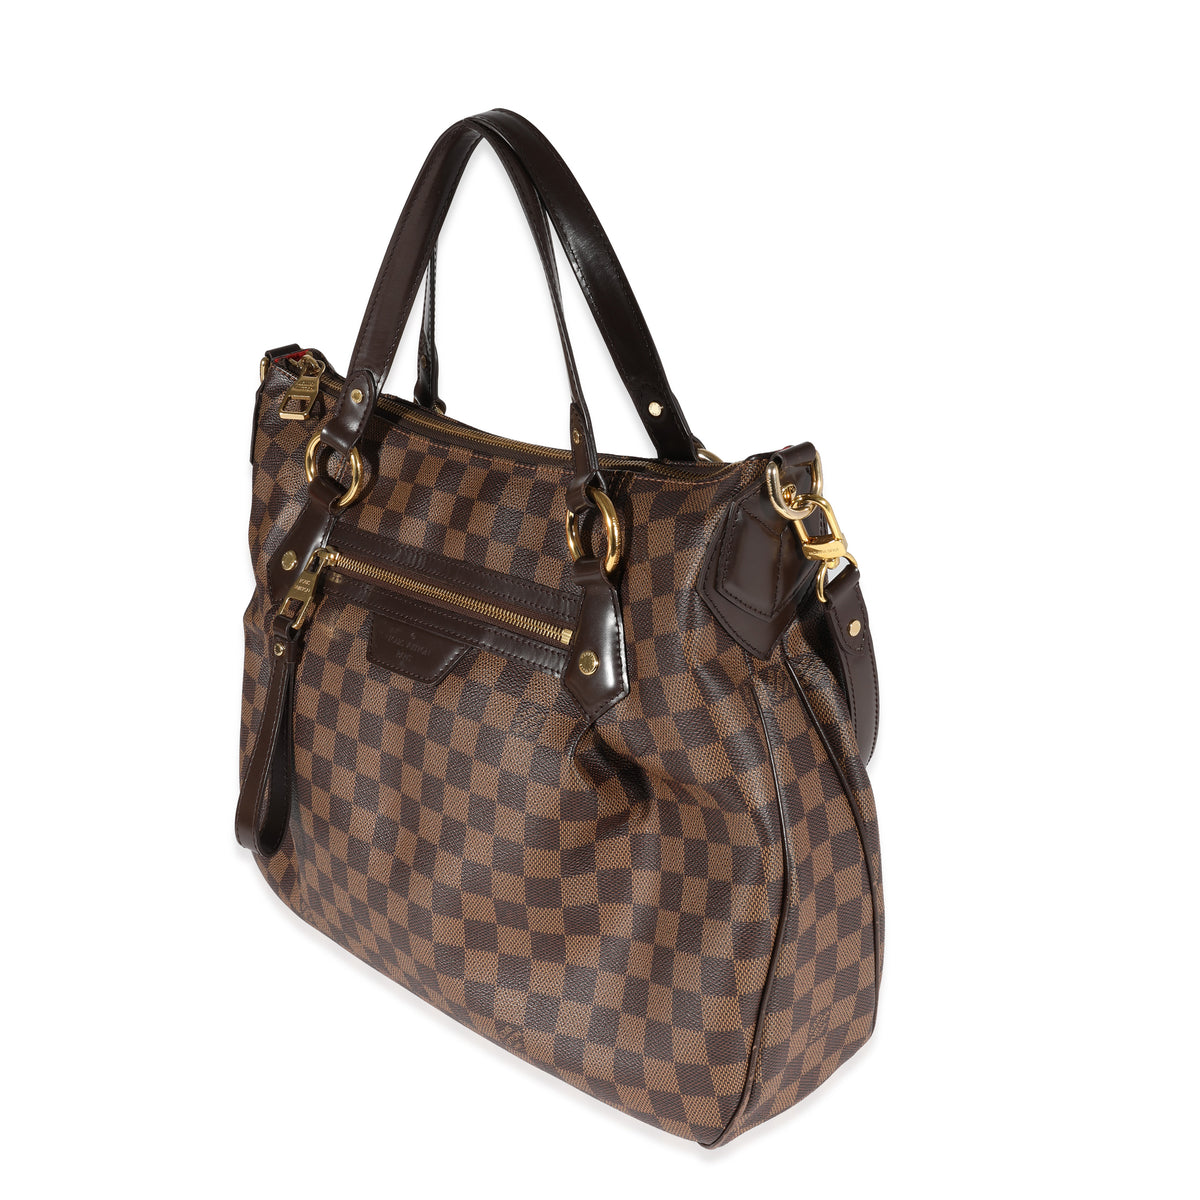 Louis Vuitton Evora Handbag in Ebene Damier Canvas and Brown